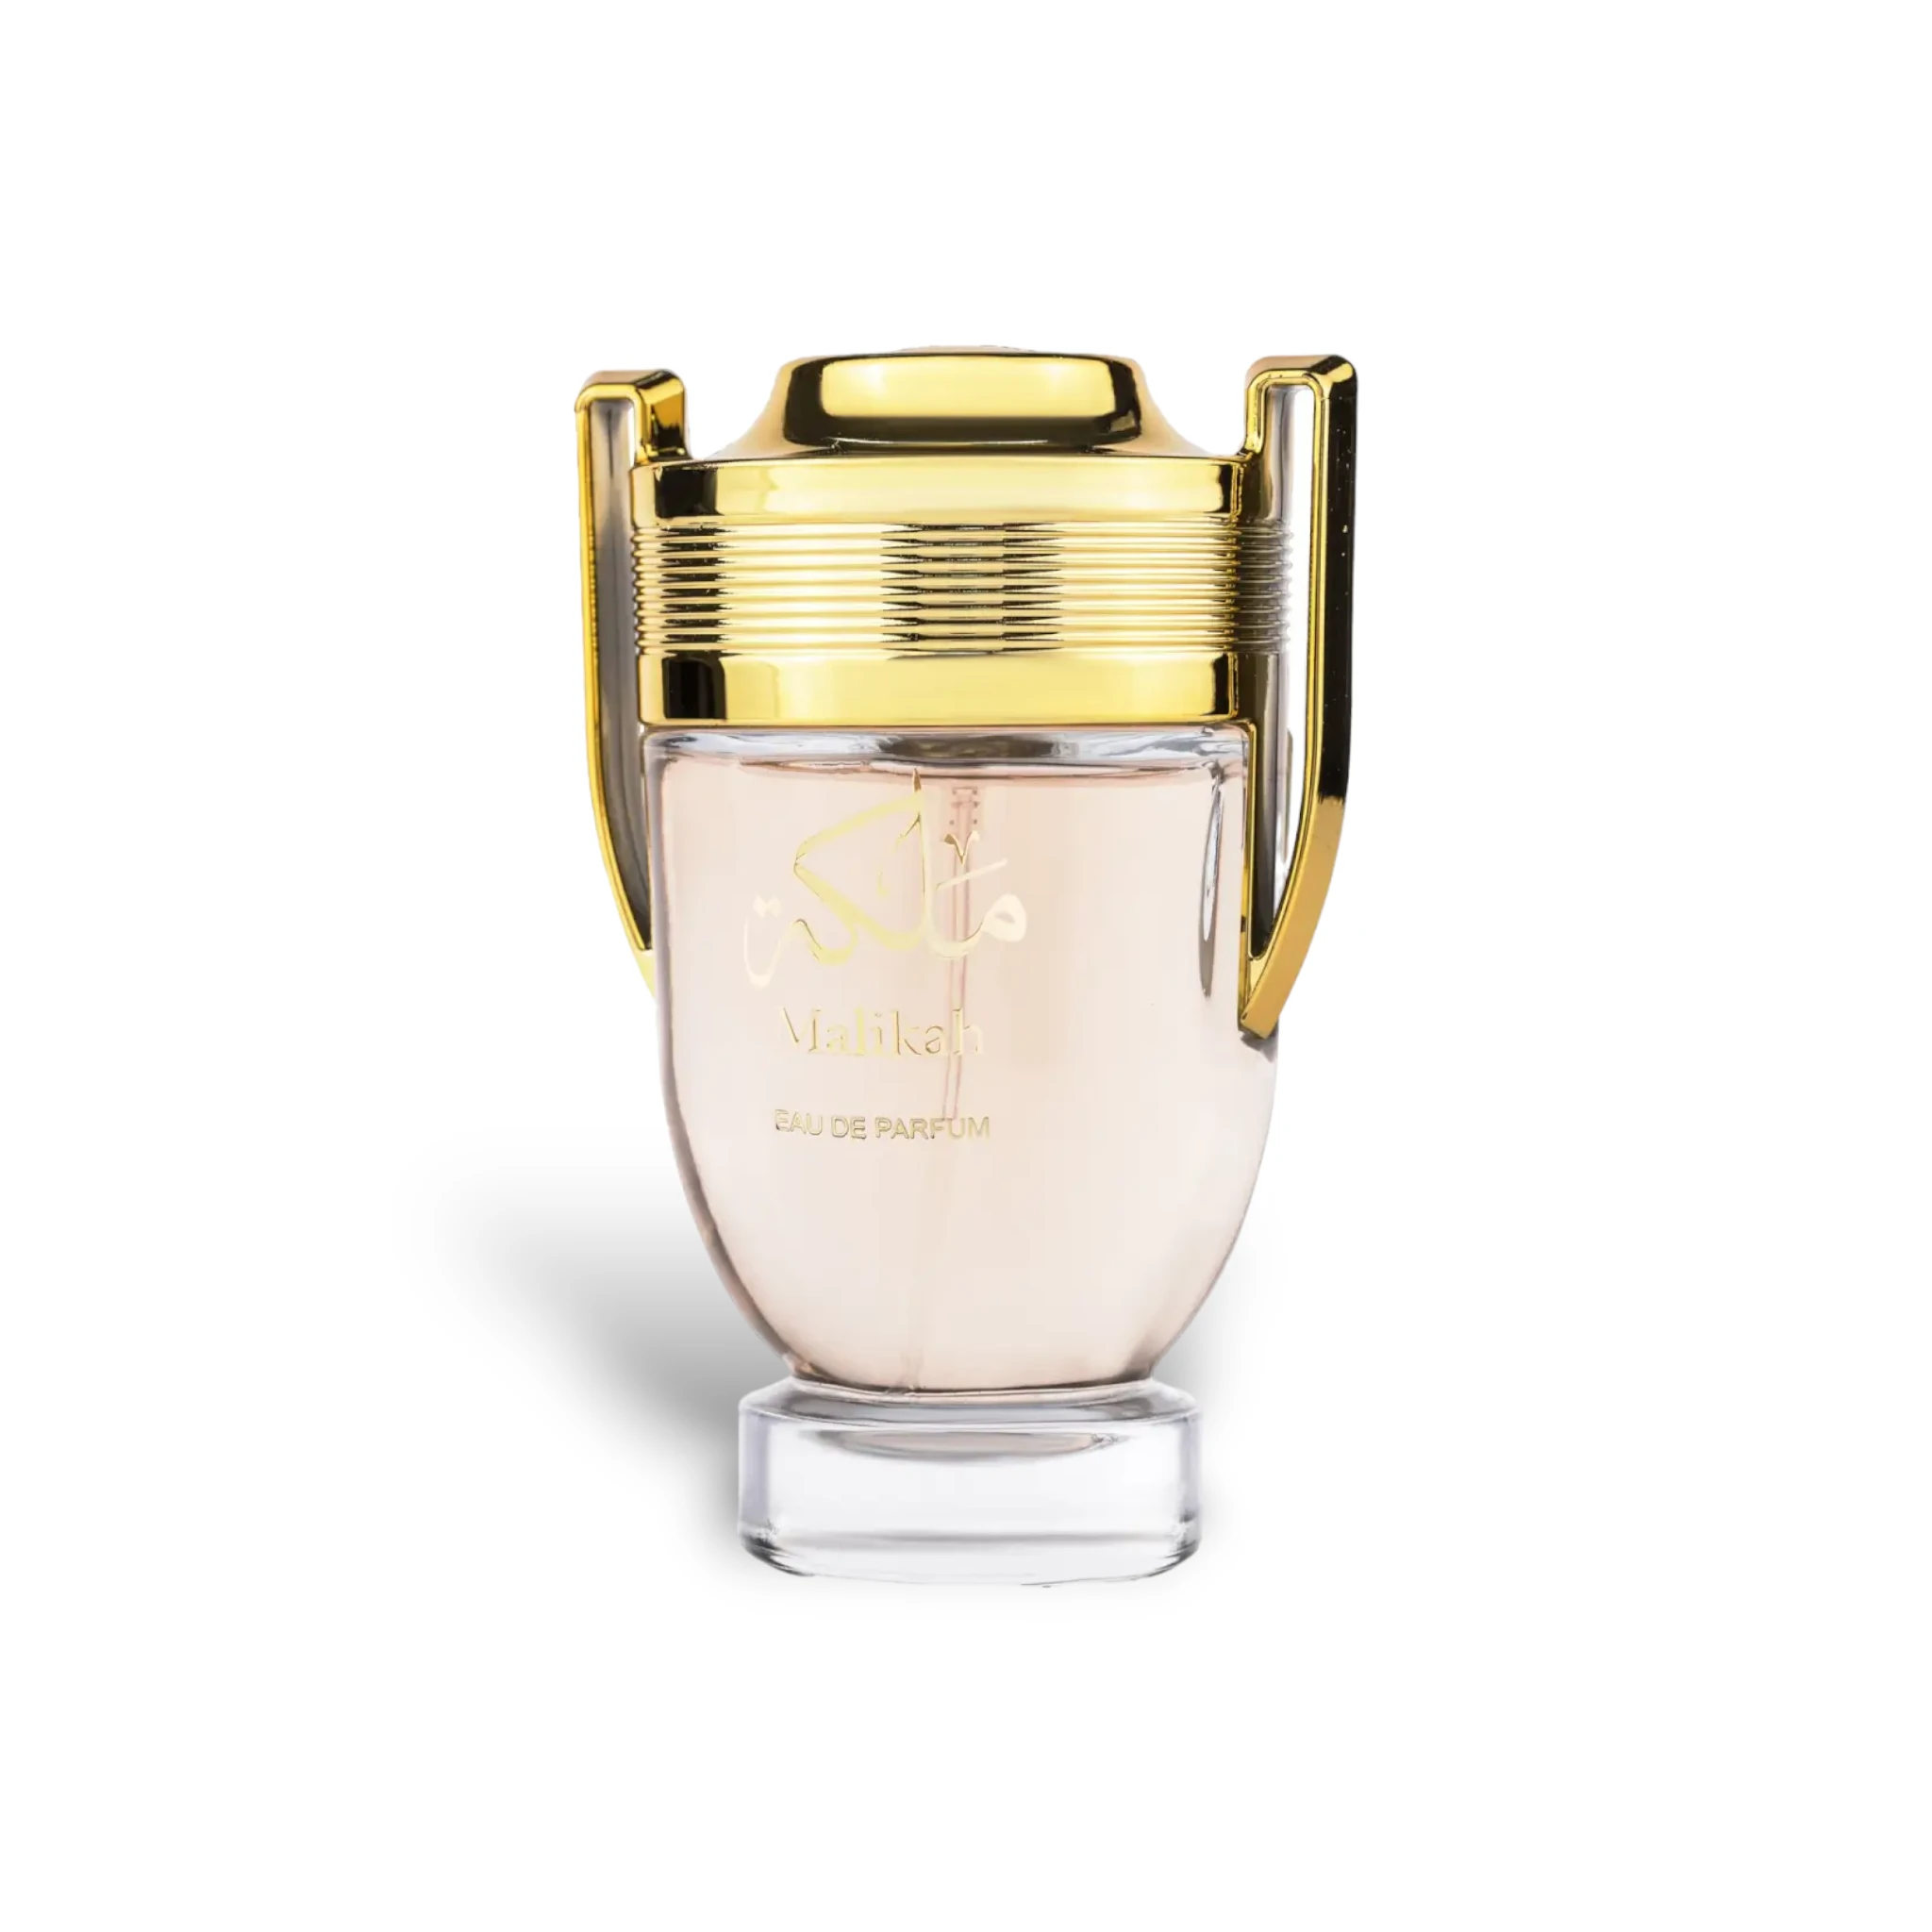 Malikah Perfume 100Ml Perfume Eau De Parfum By Ard Al Zaafaran